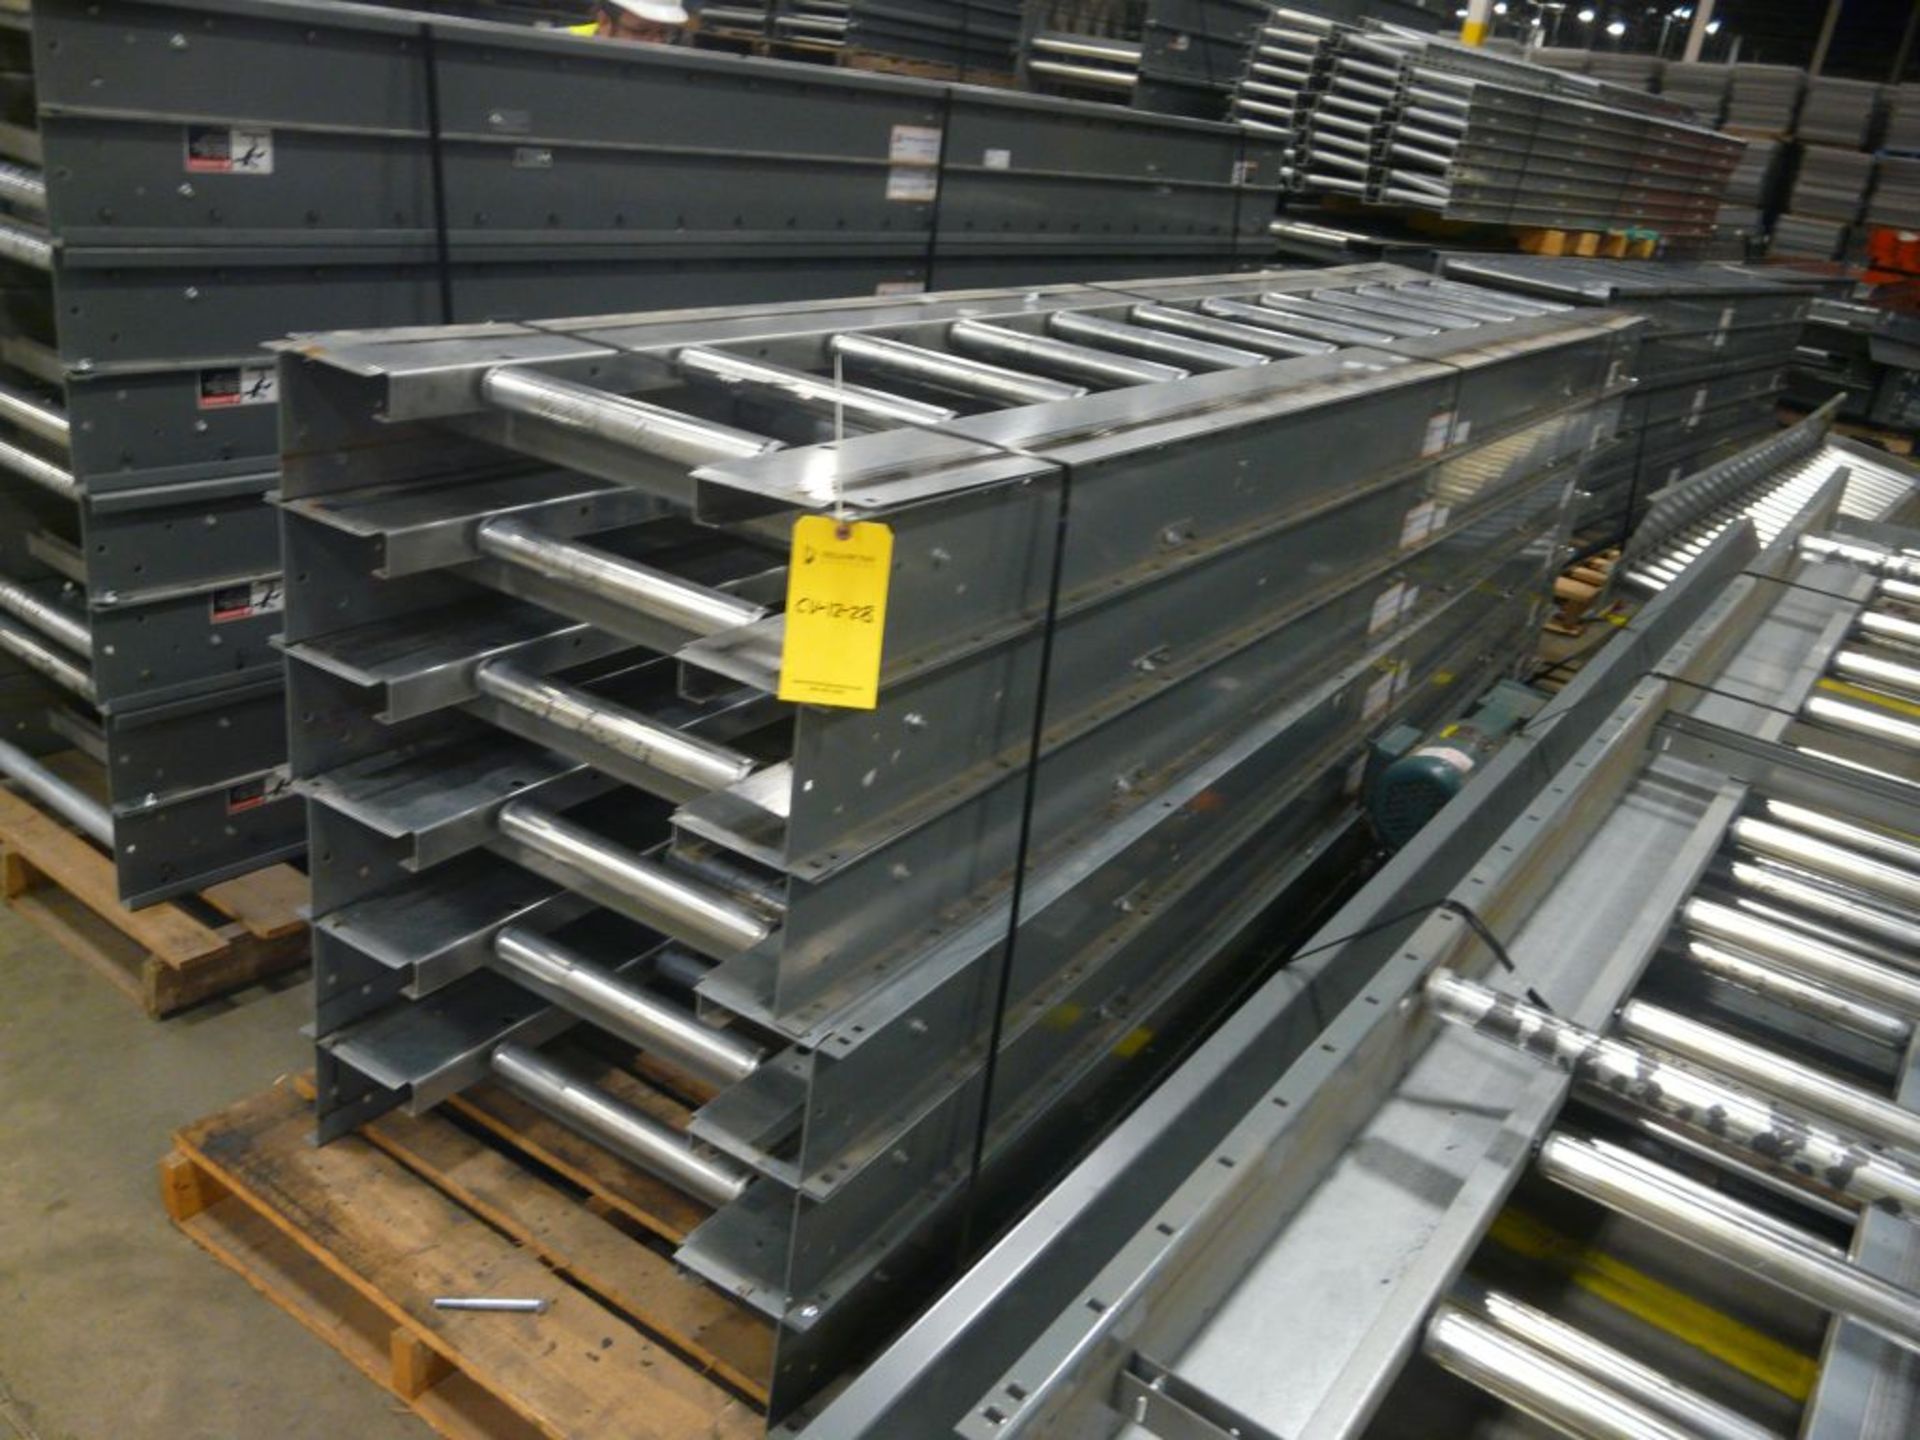 Lot of (3) 200 Belt Intermediate Conveyors - 12'L x 28"W; Tag: 223709 - $30 Lot Loading Fee